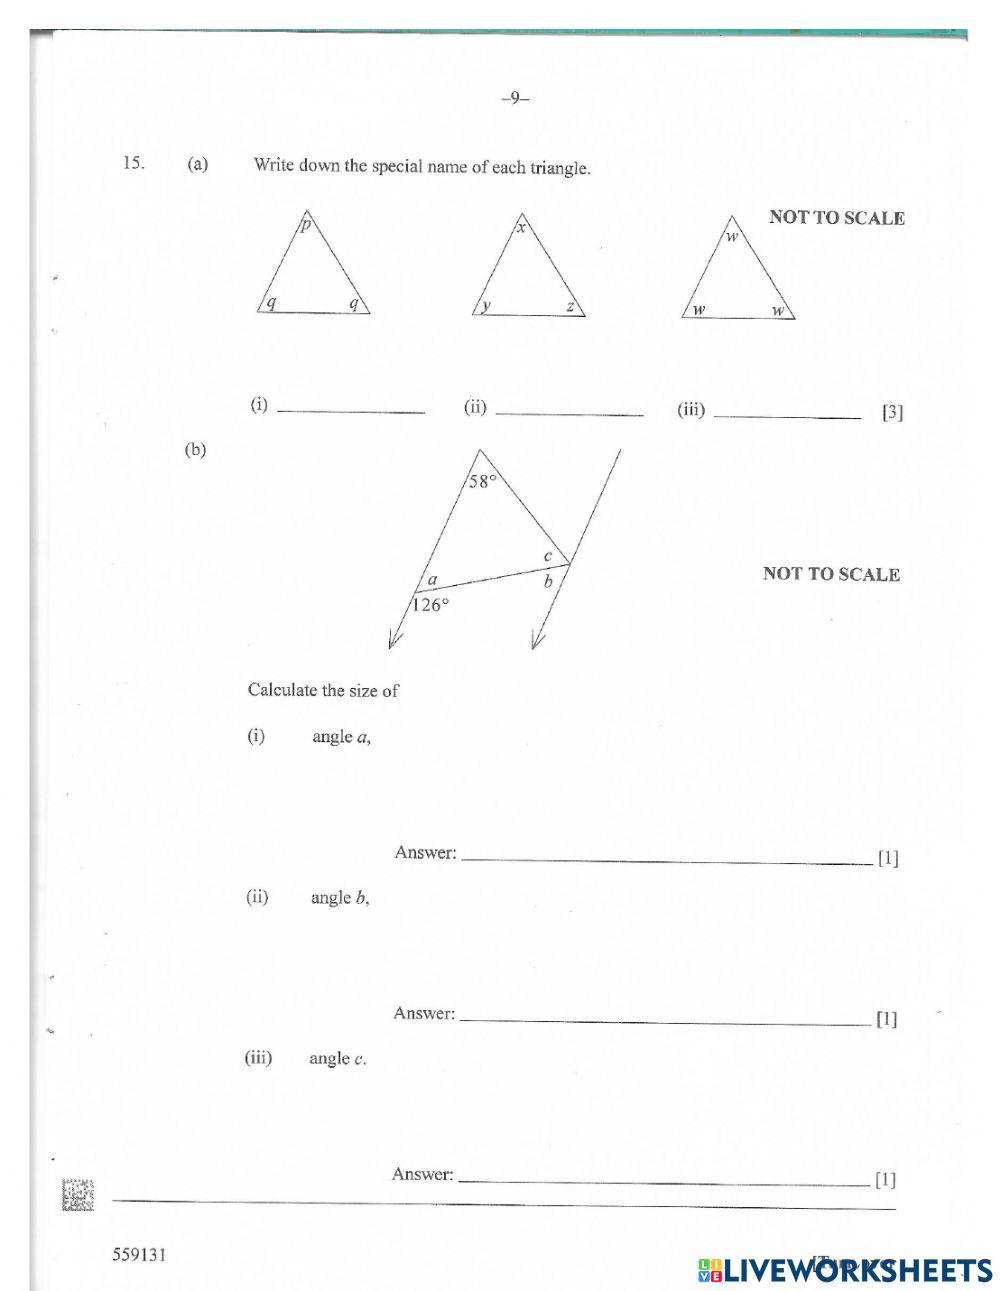 2019 BGCSE Mathematics Paper 1 pt 1